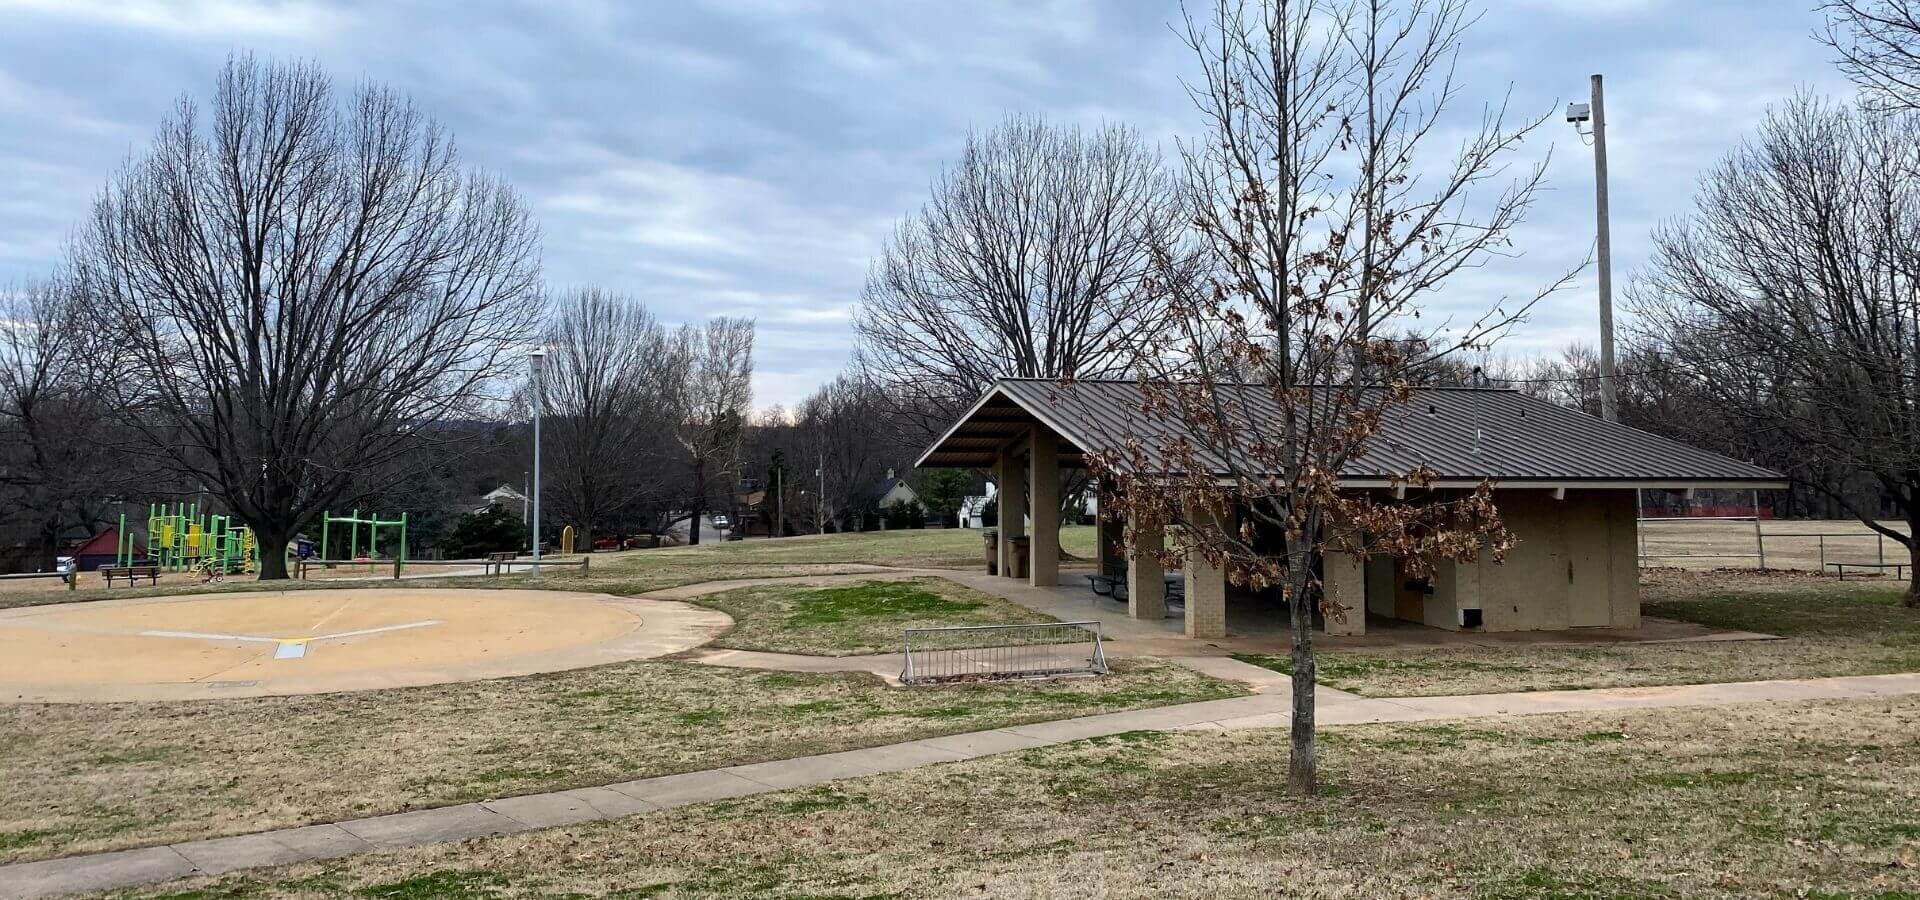 Picnic Spot Area at Zink Park in Tulsa OK - Explore with TulsaGo.jpg